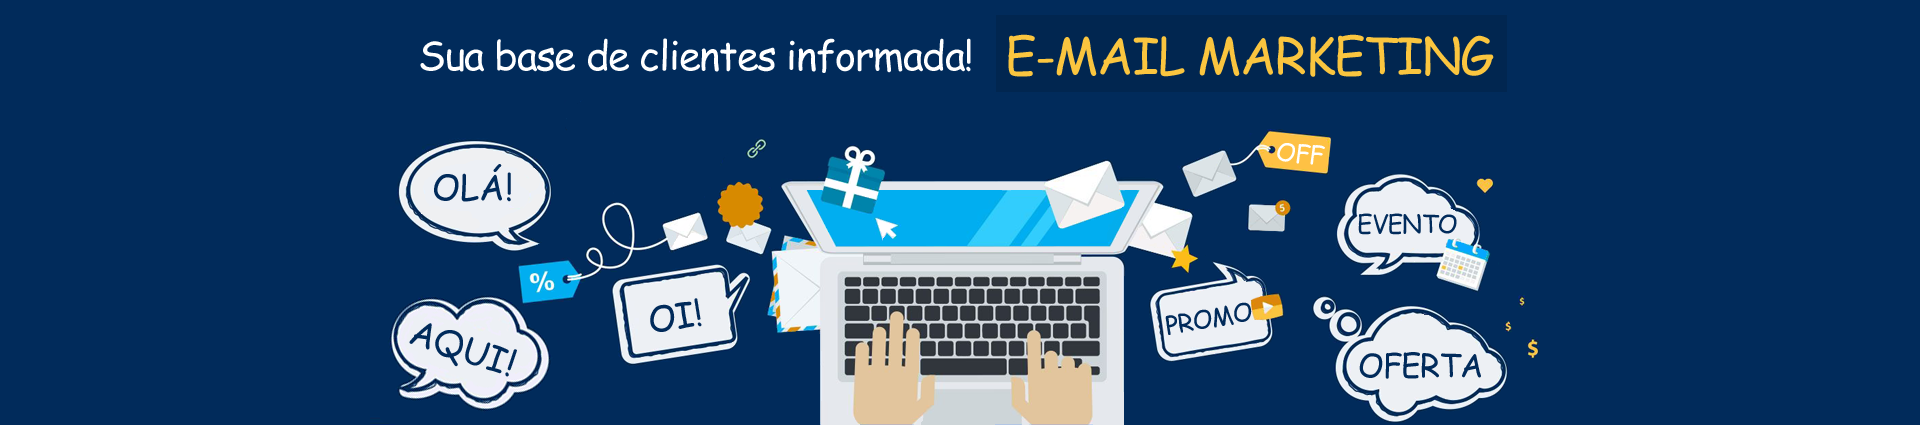 E-mail marketing - mailing